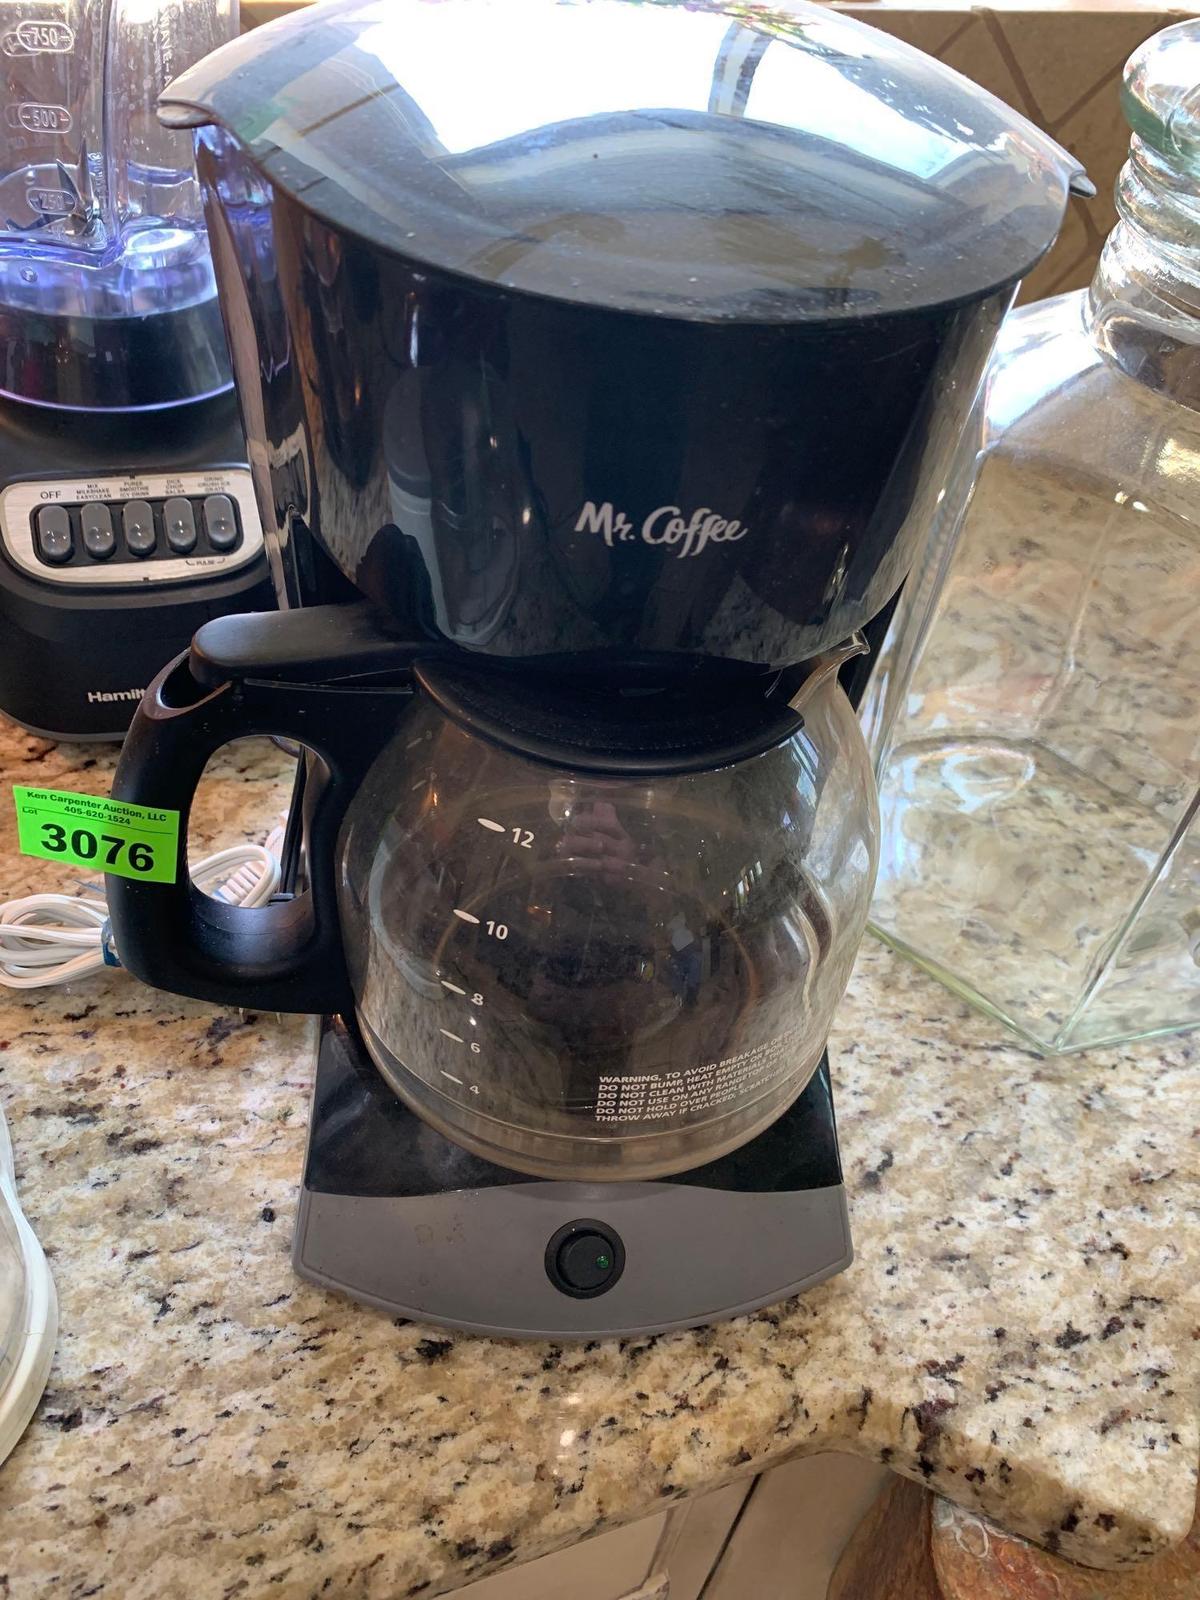 12 cup, Mr. coffee, coffee maker